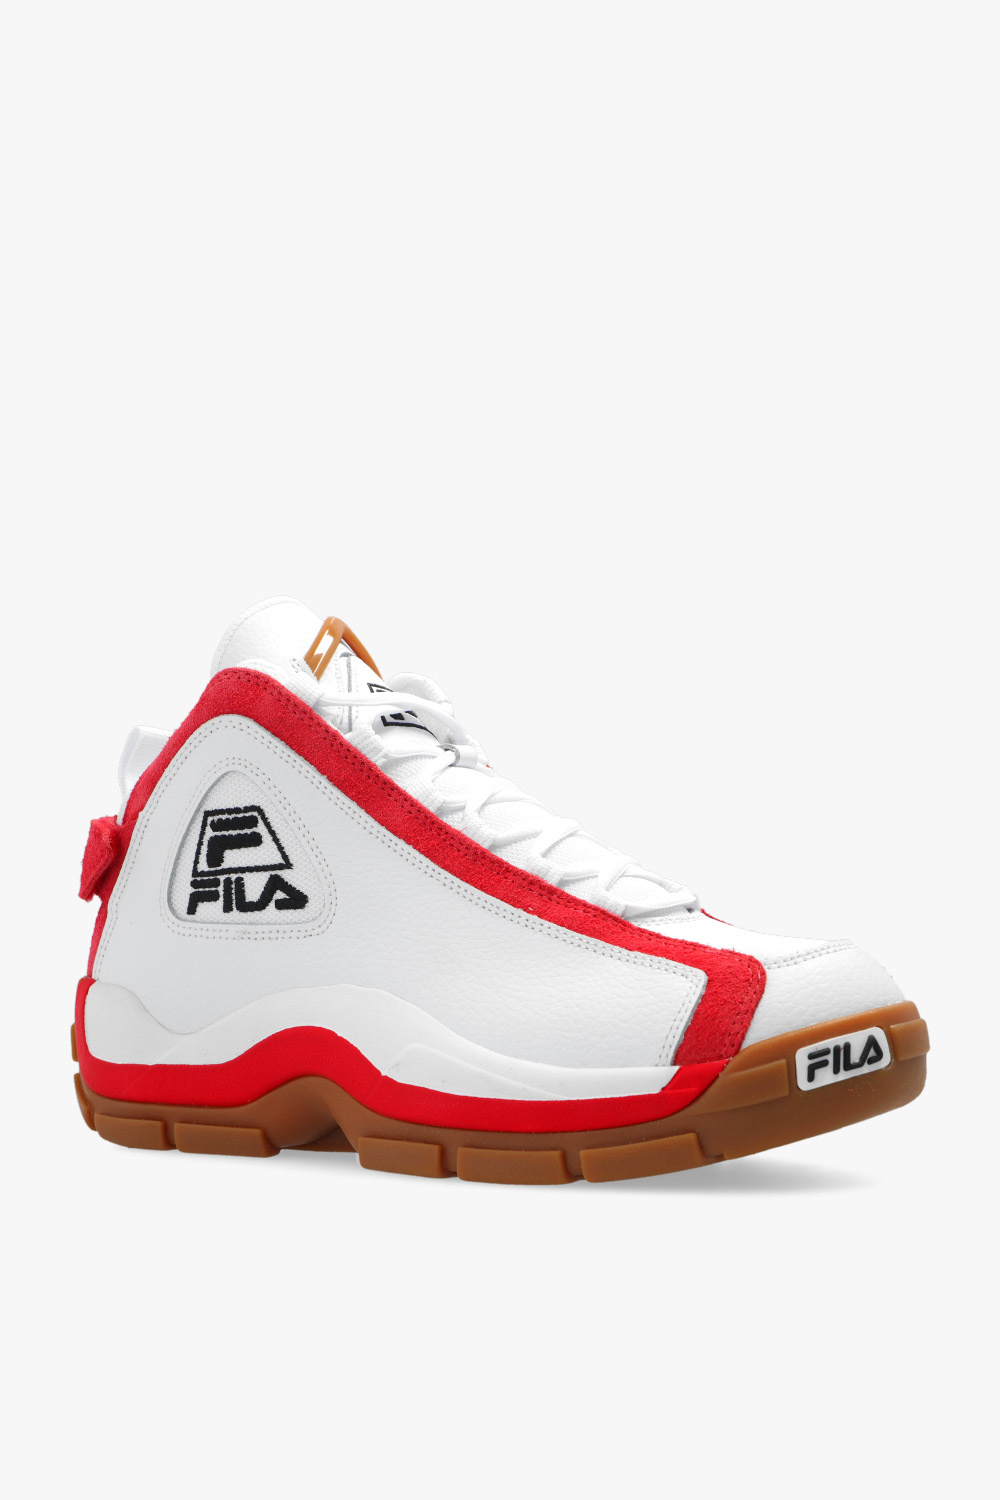 Fila Hill' sneakers | Men's Shoes | StclaircomoShops | Ciabatte FILA Morro Bay Slipper Jr 1010934.40006 Lilac Sachet